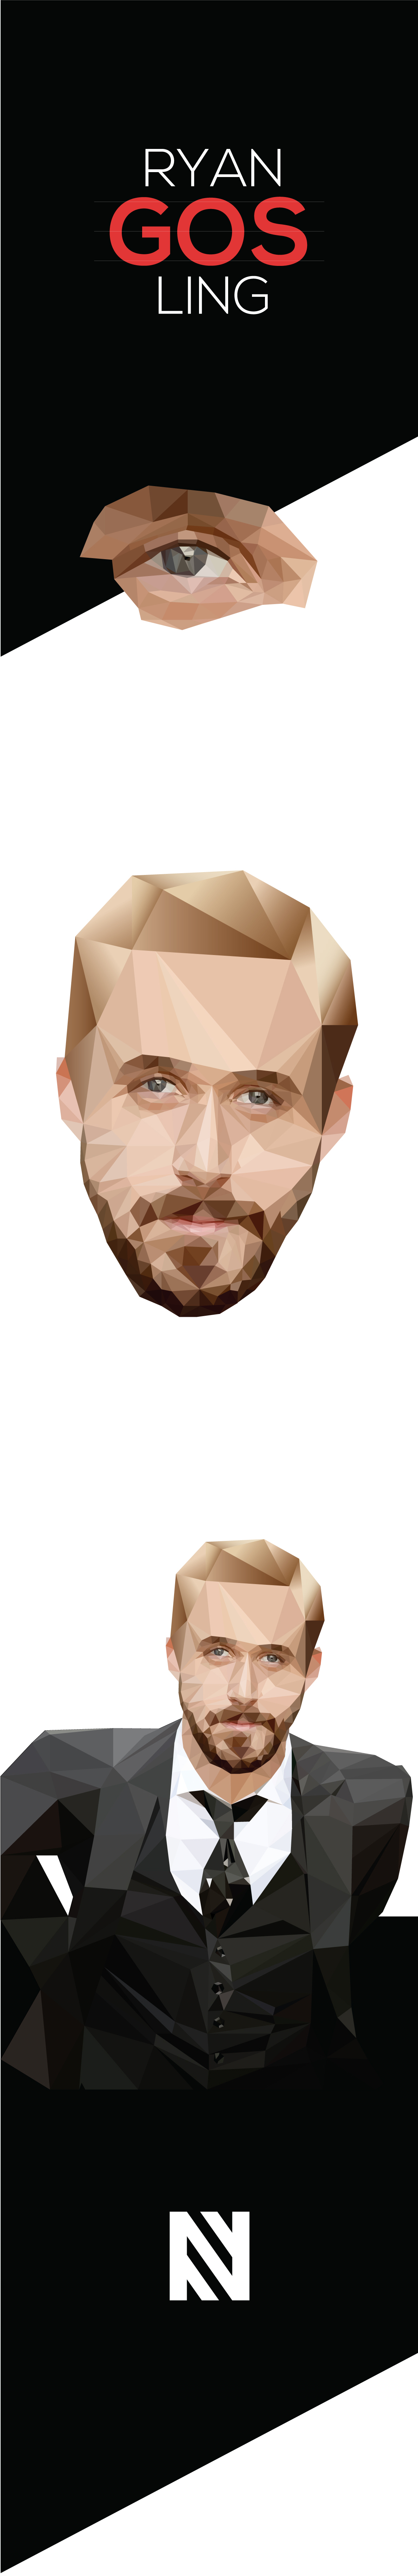 Ryan Gosling portrait design